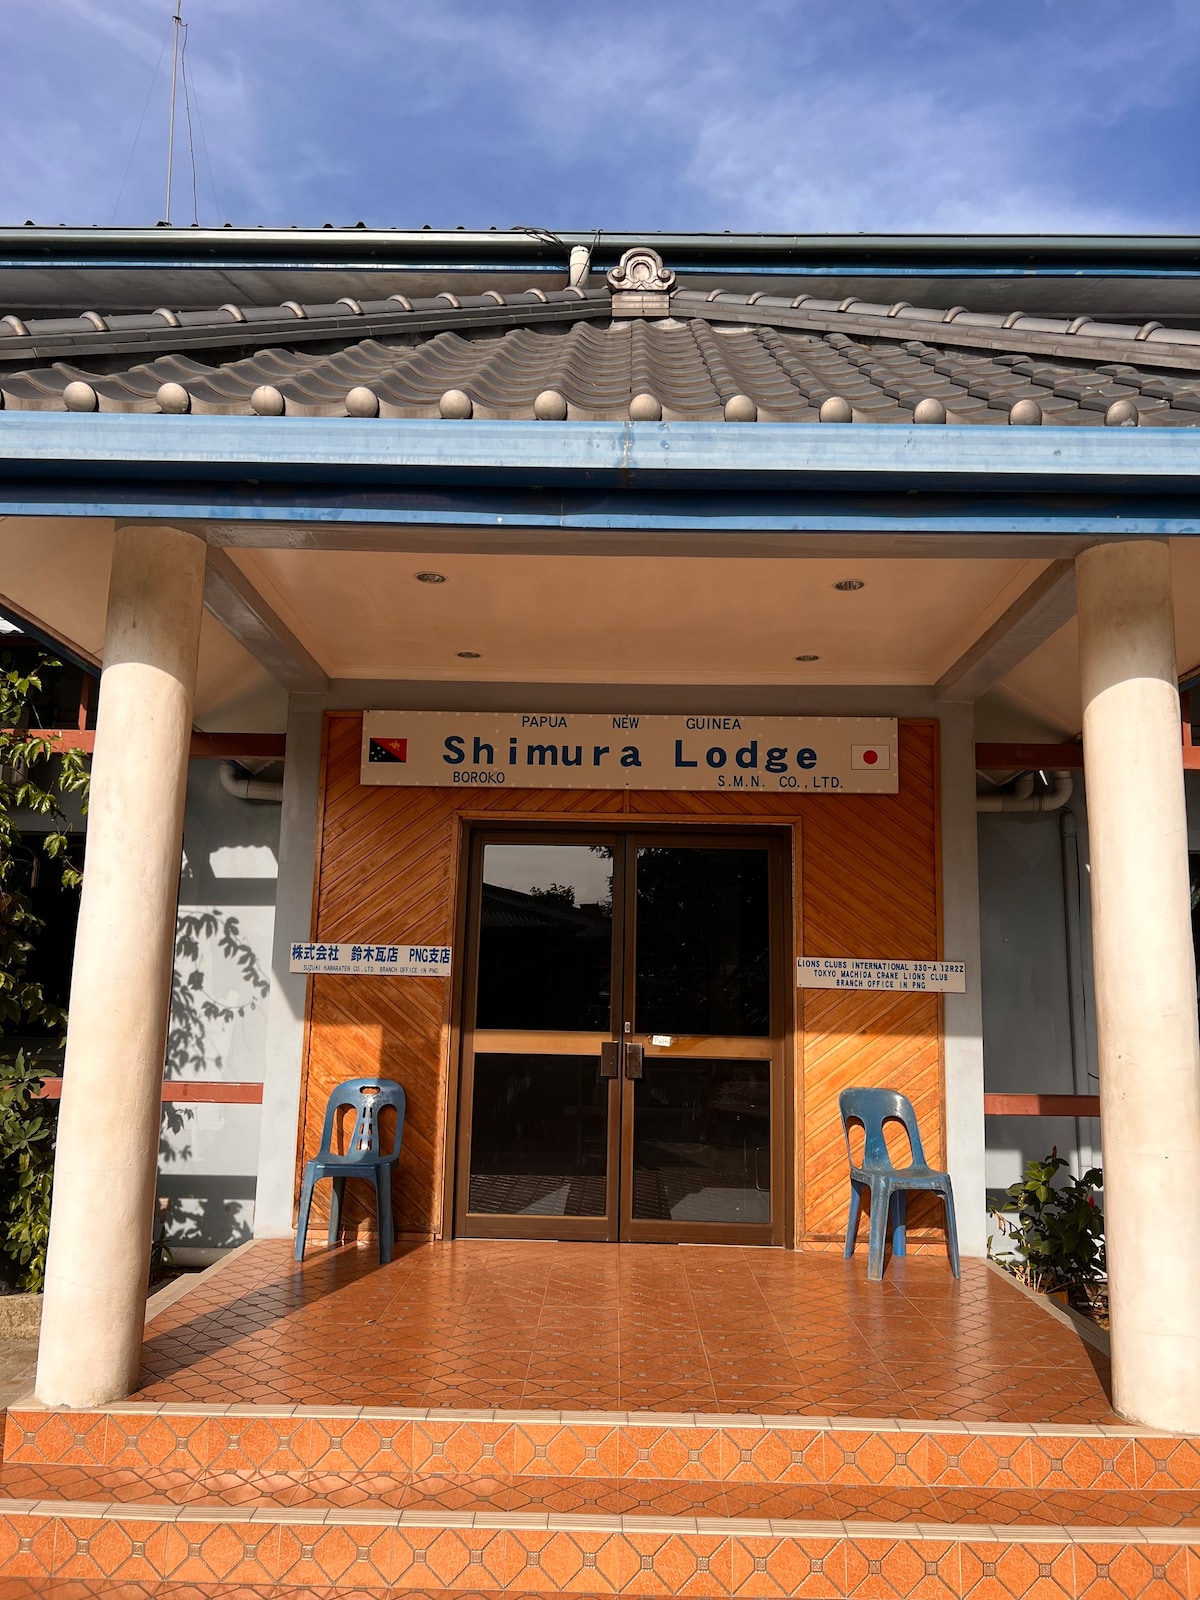 Shimura Lodge, Port Moresby.